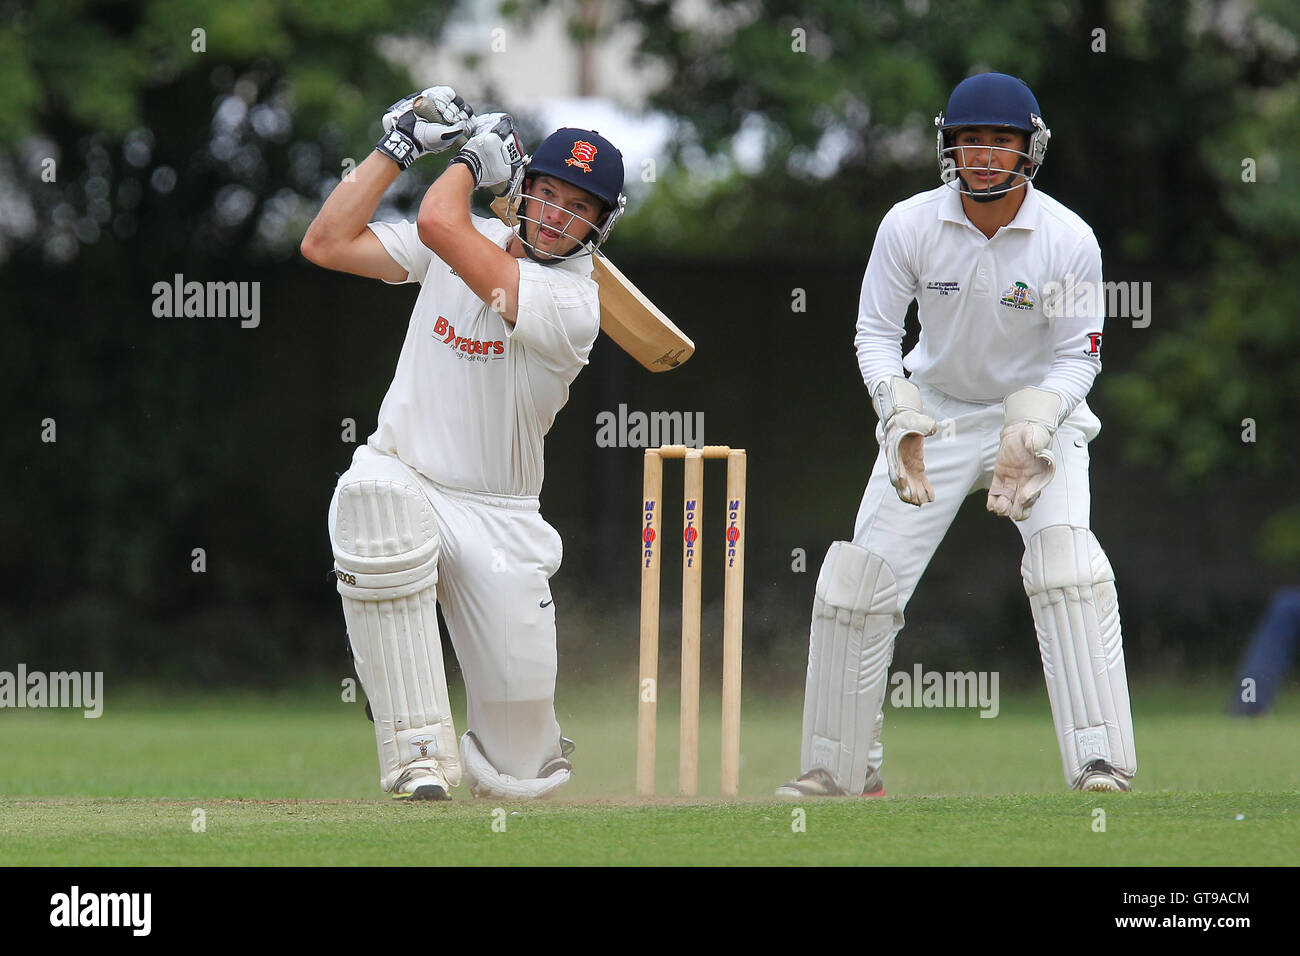 - South Woodford CC vs Wanstead CC - Essex Cricket League - 10/08/13 Stock Photo